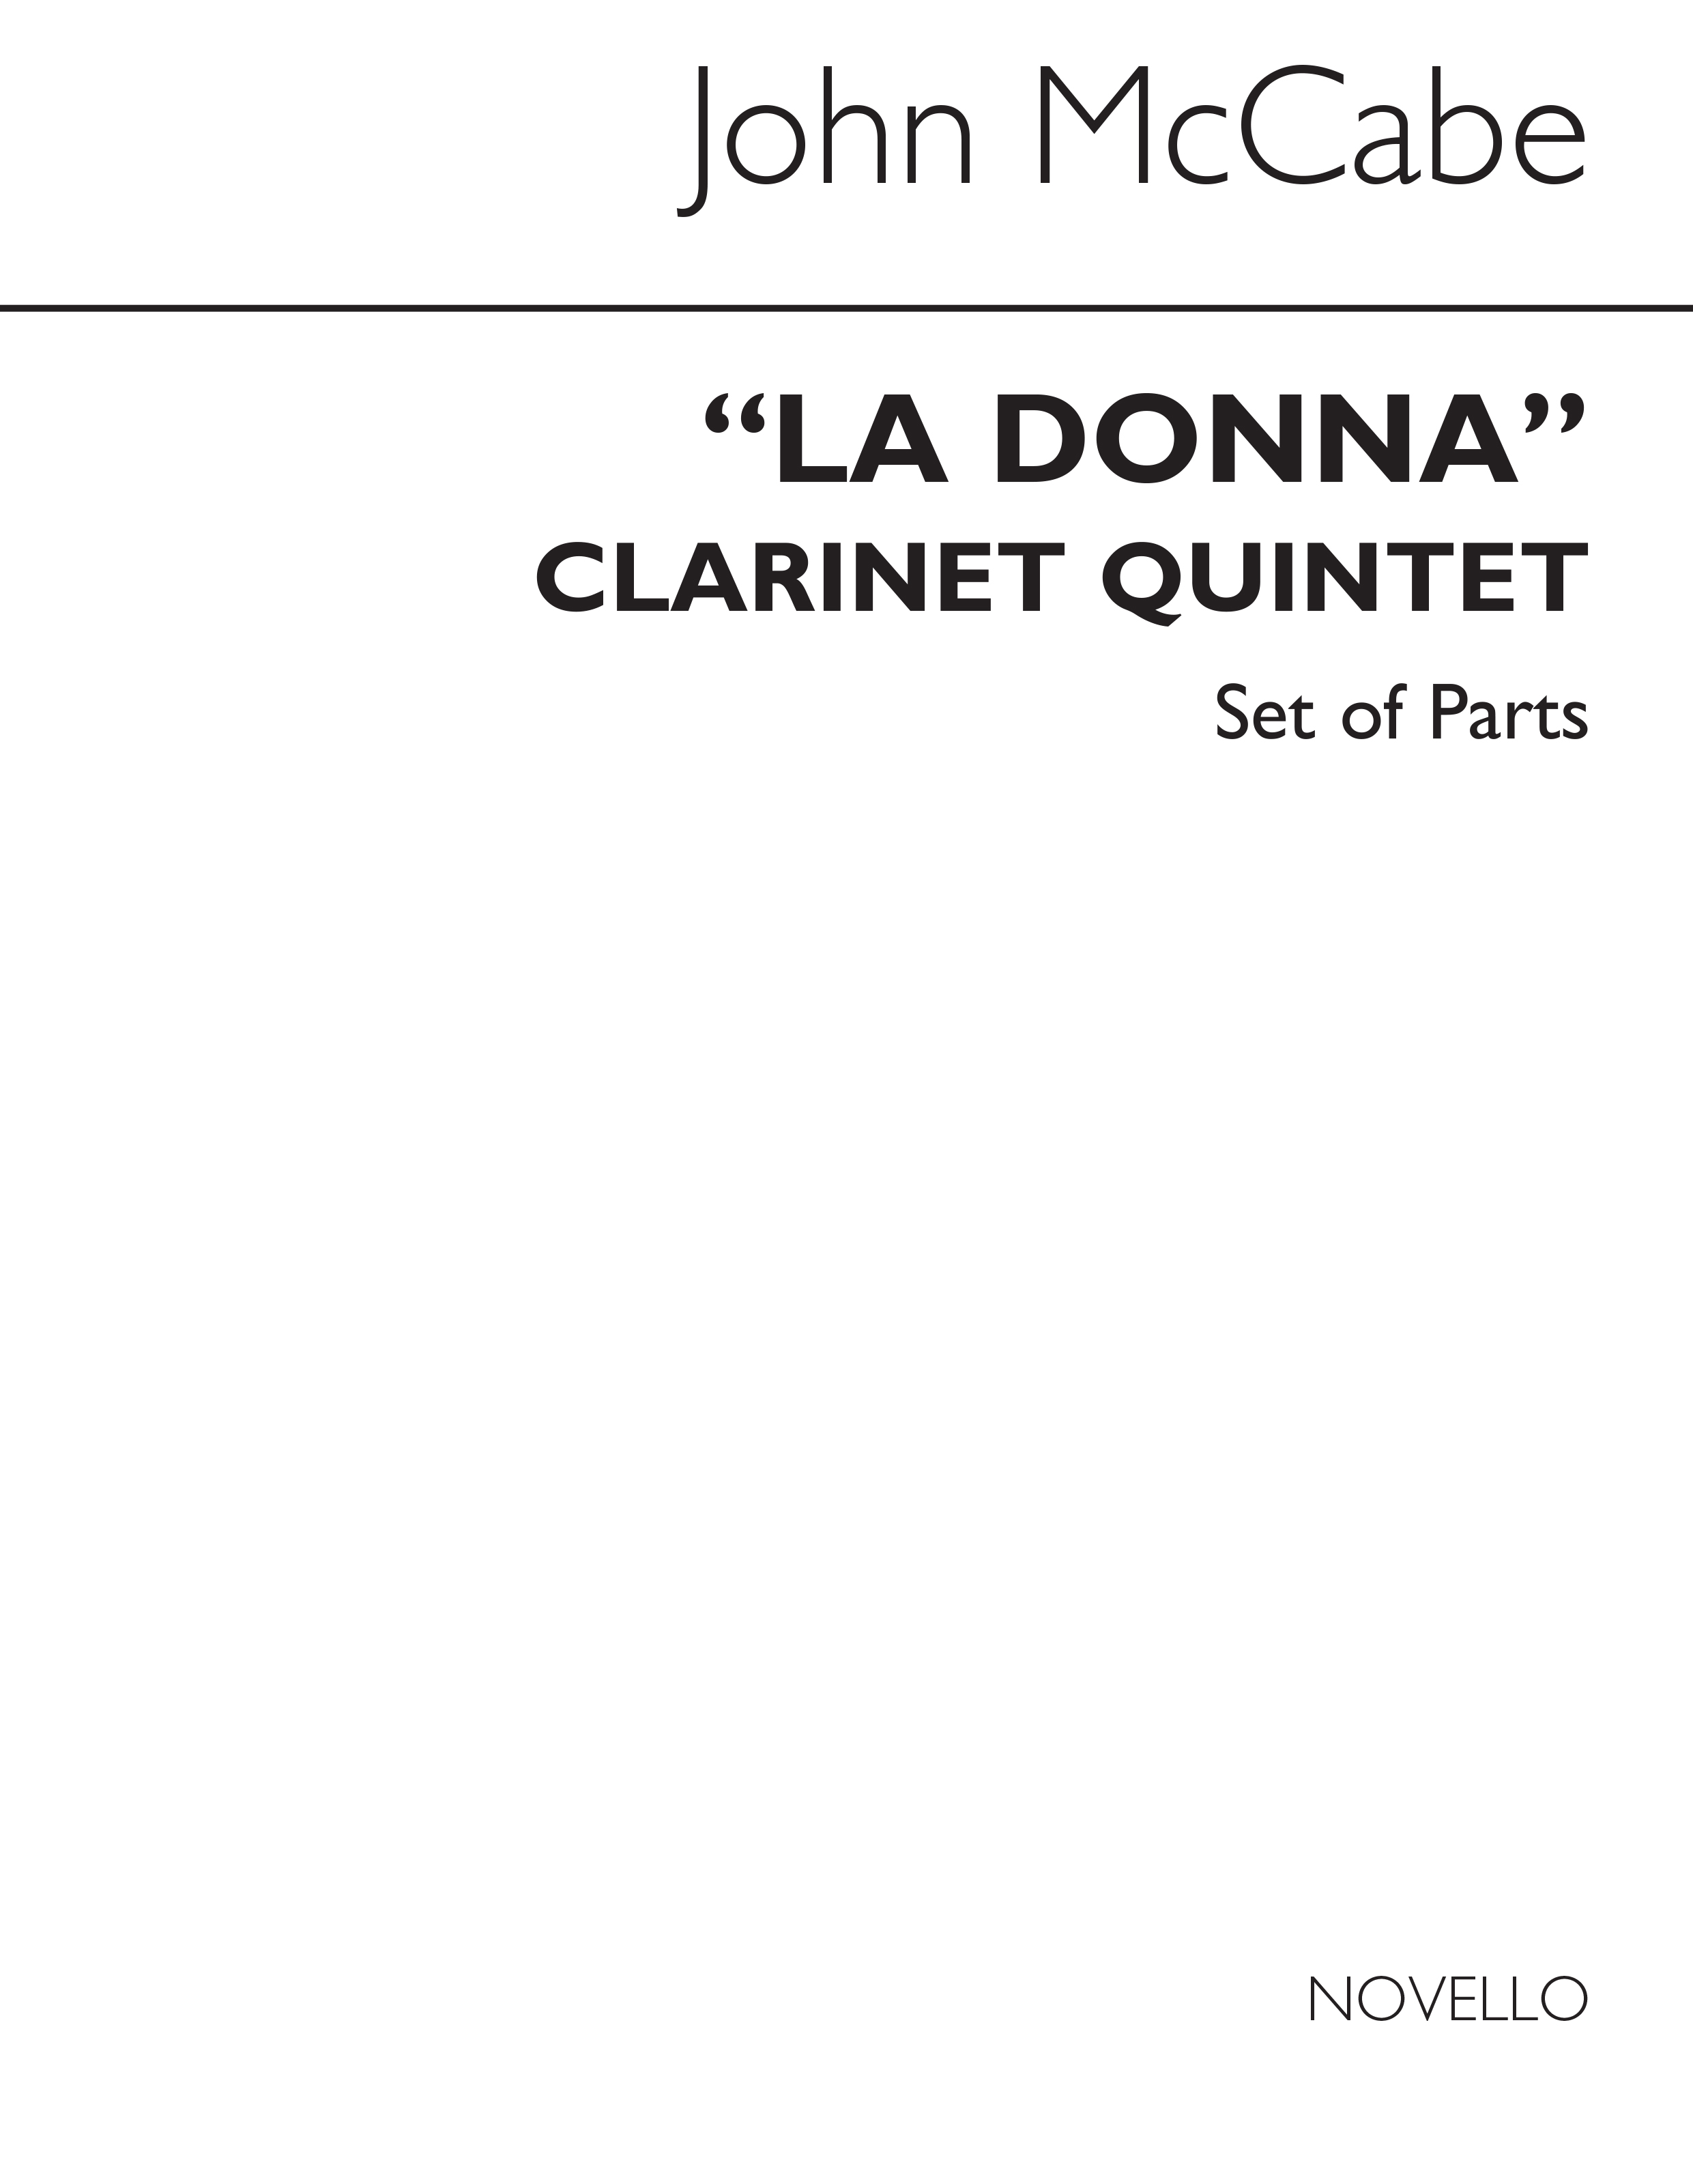 John McCabe: Clarinet Quintet - 'La Donna' (Parts): Clarinet: Parts